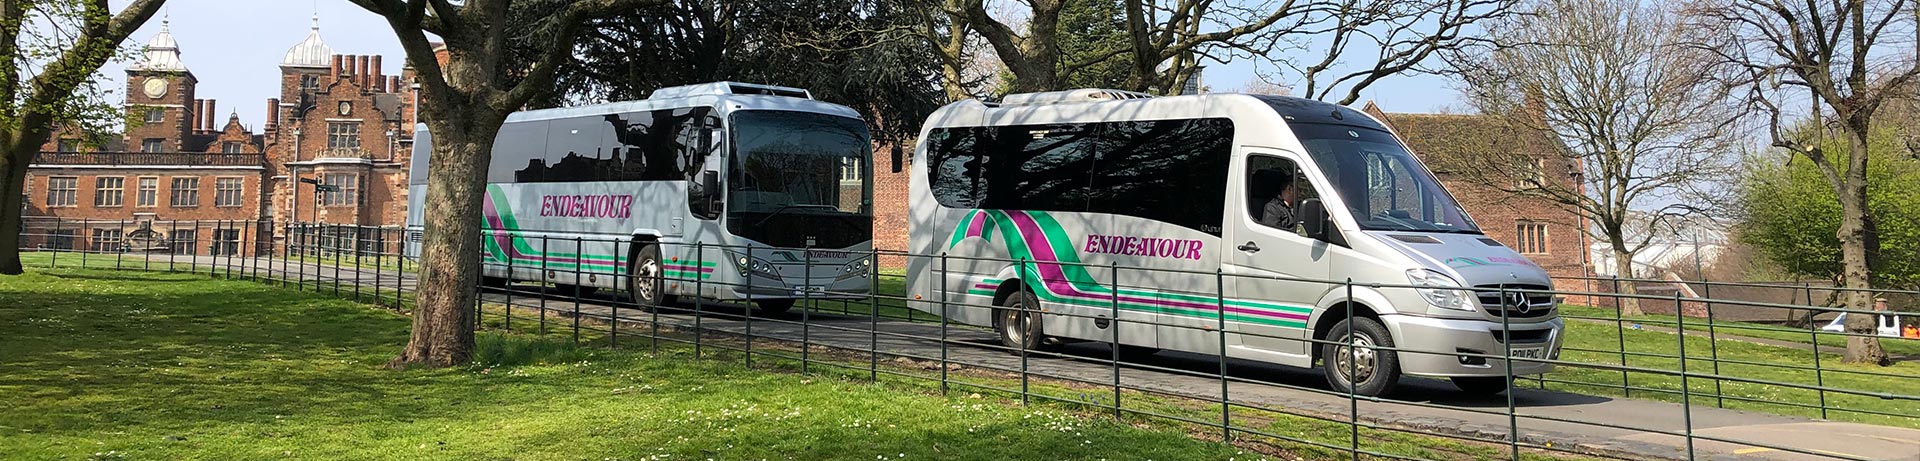 coach trips birmingham